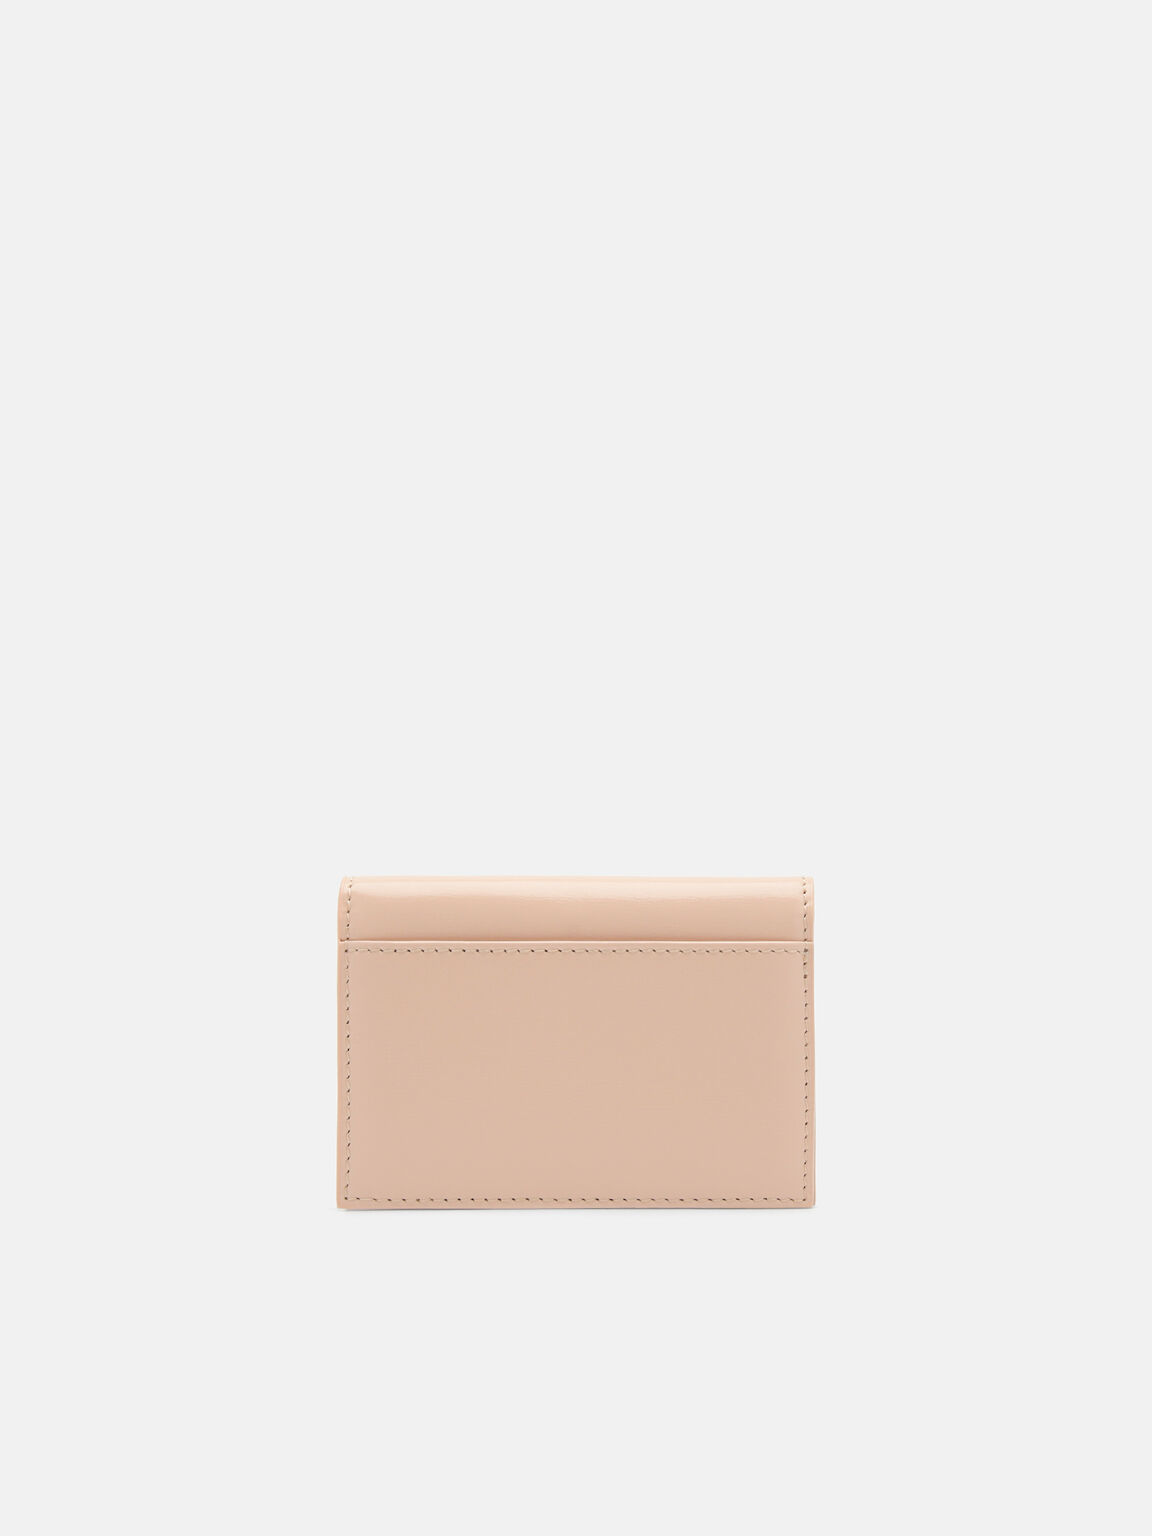 PEDRO Studio Leather Bi-Fold Card Holder, Nude